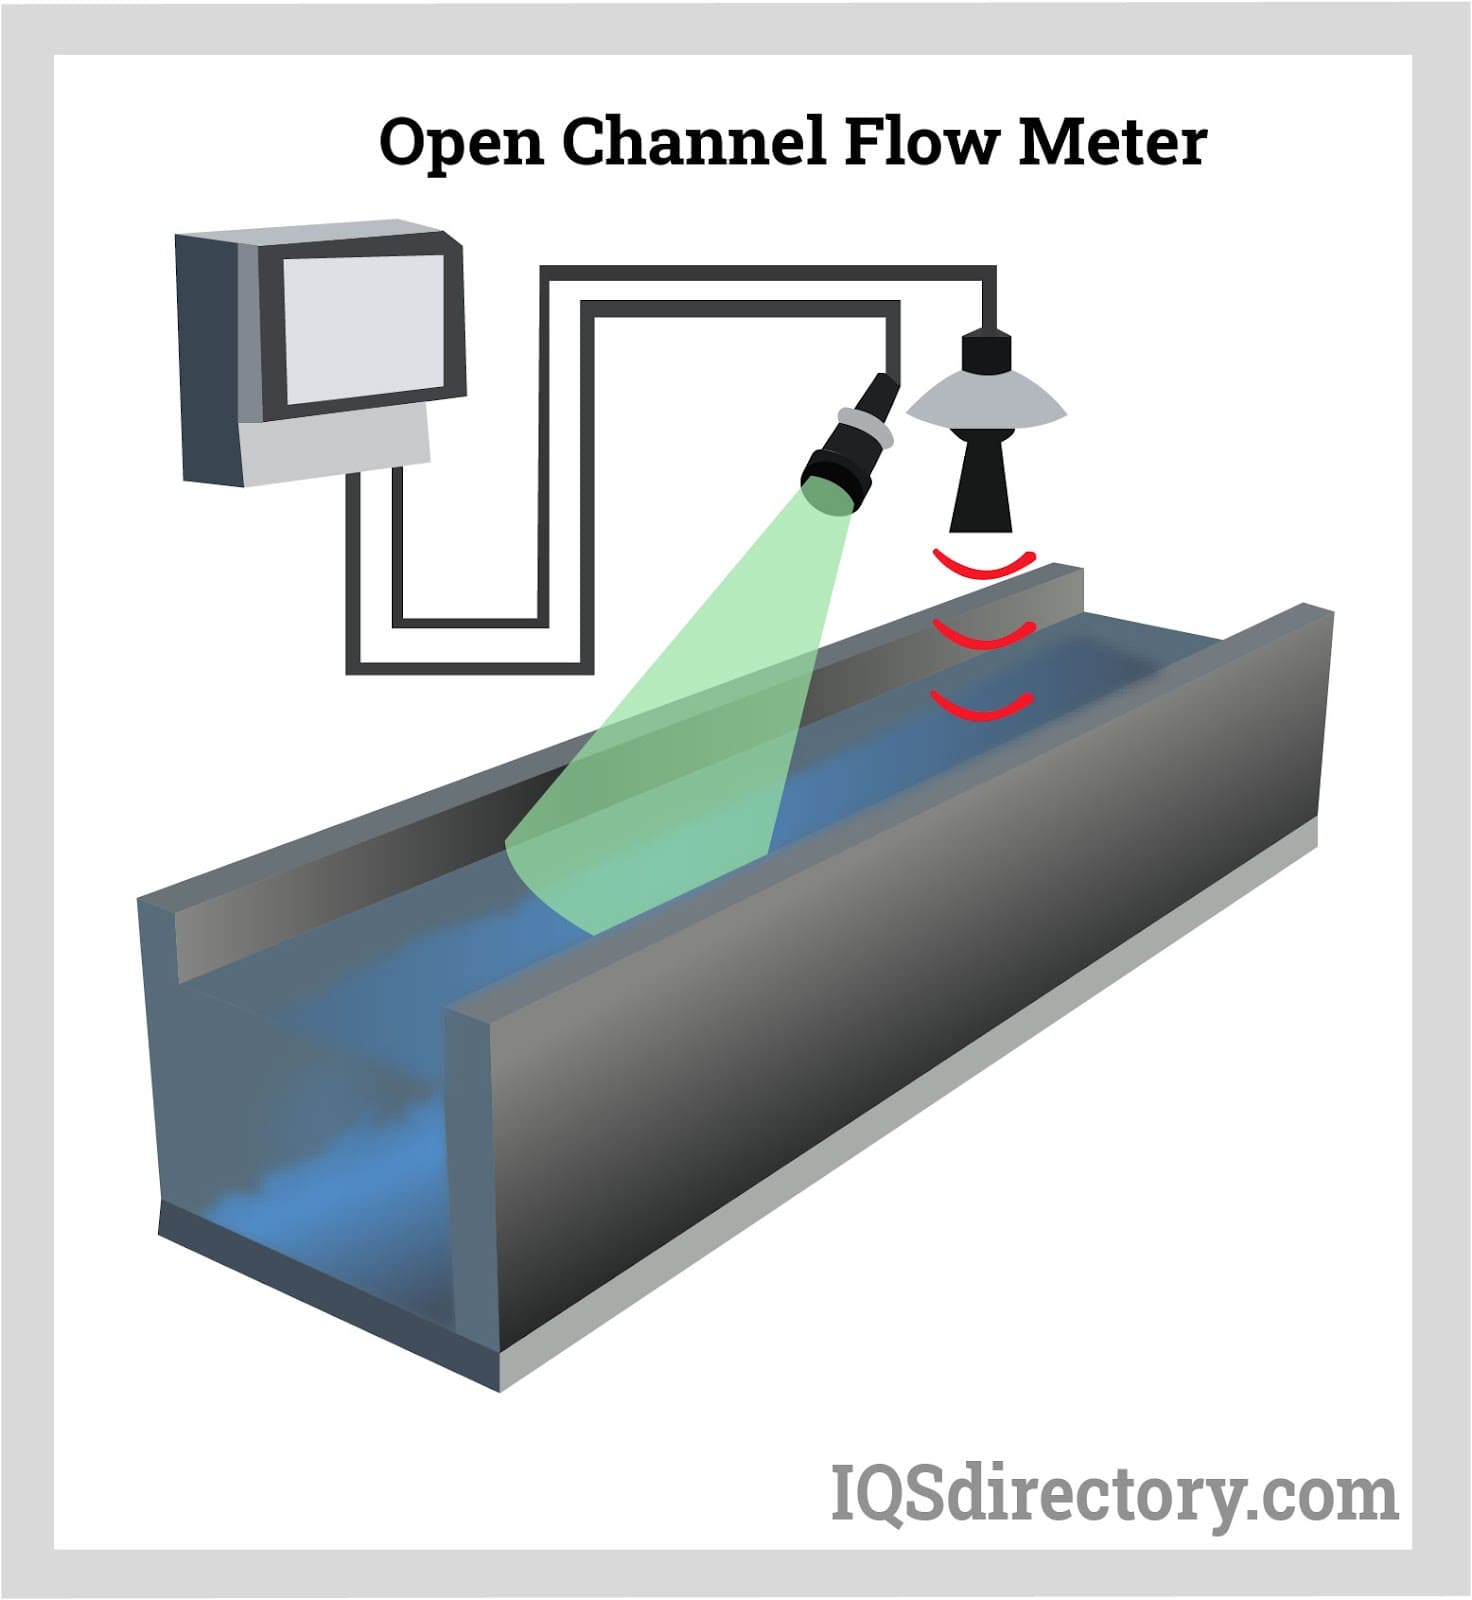 Open Channel Flow Meter